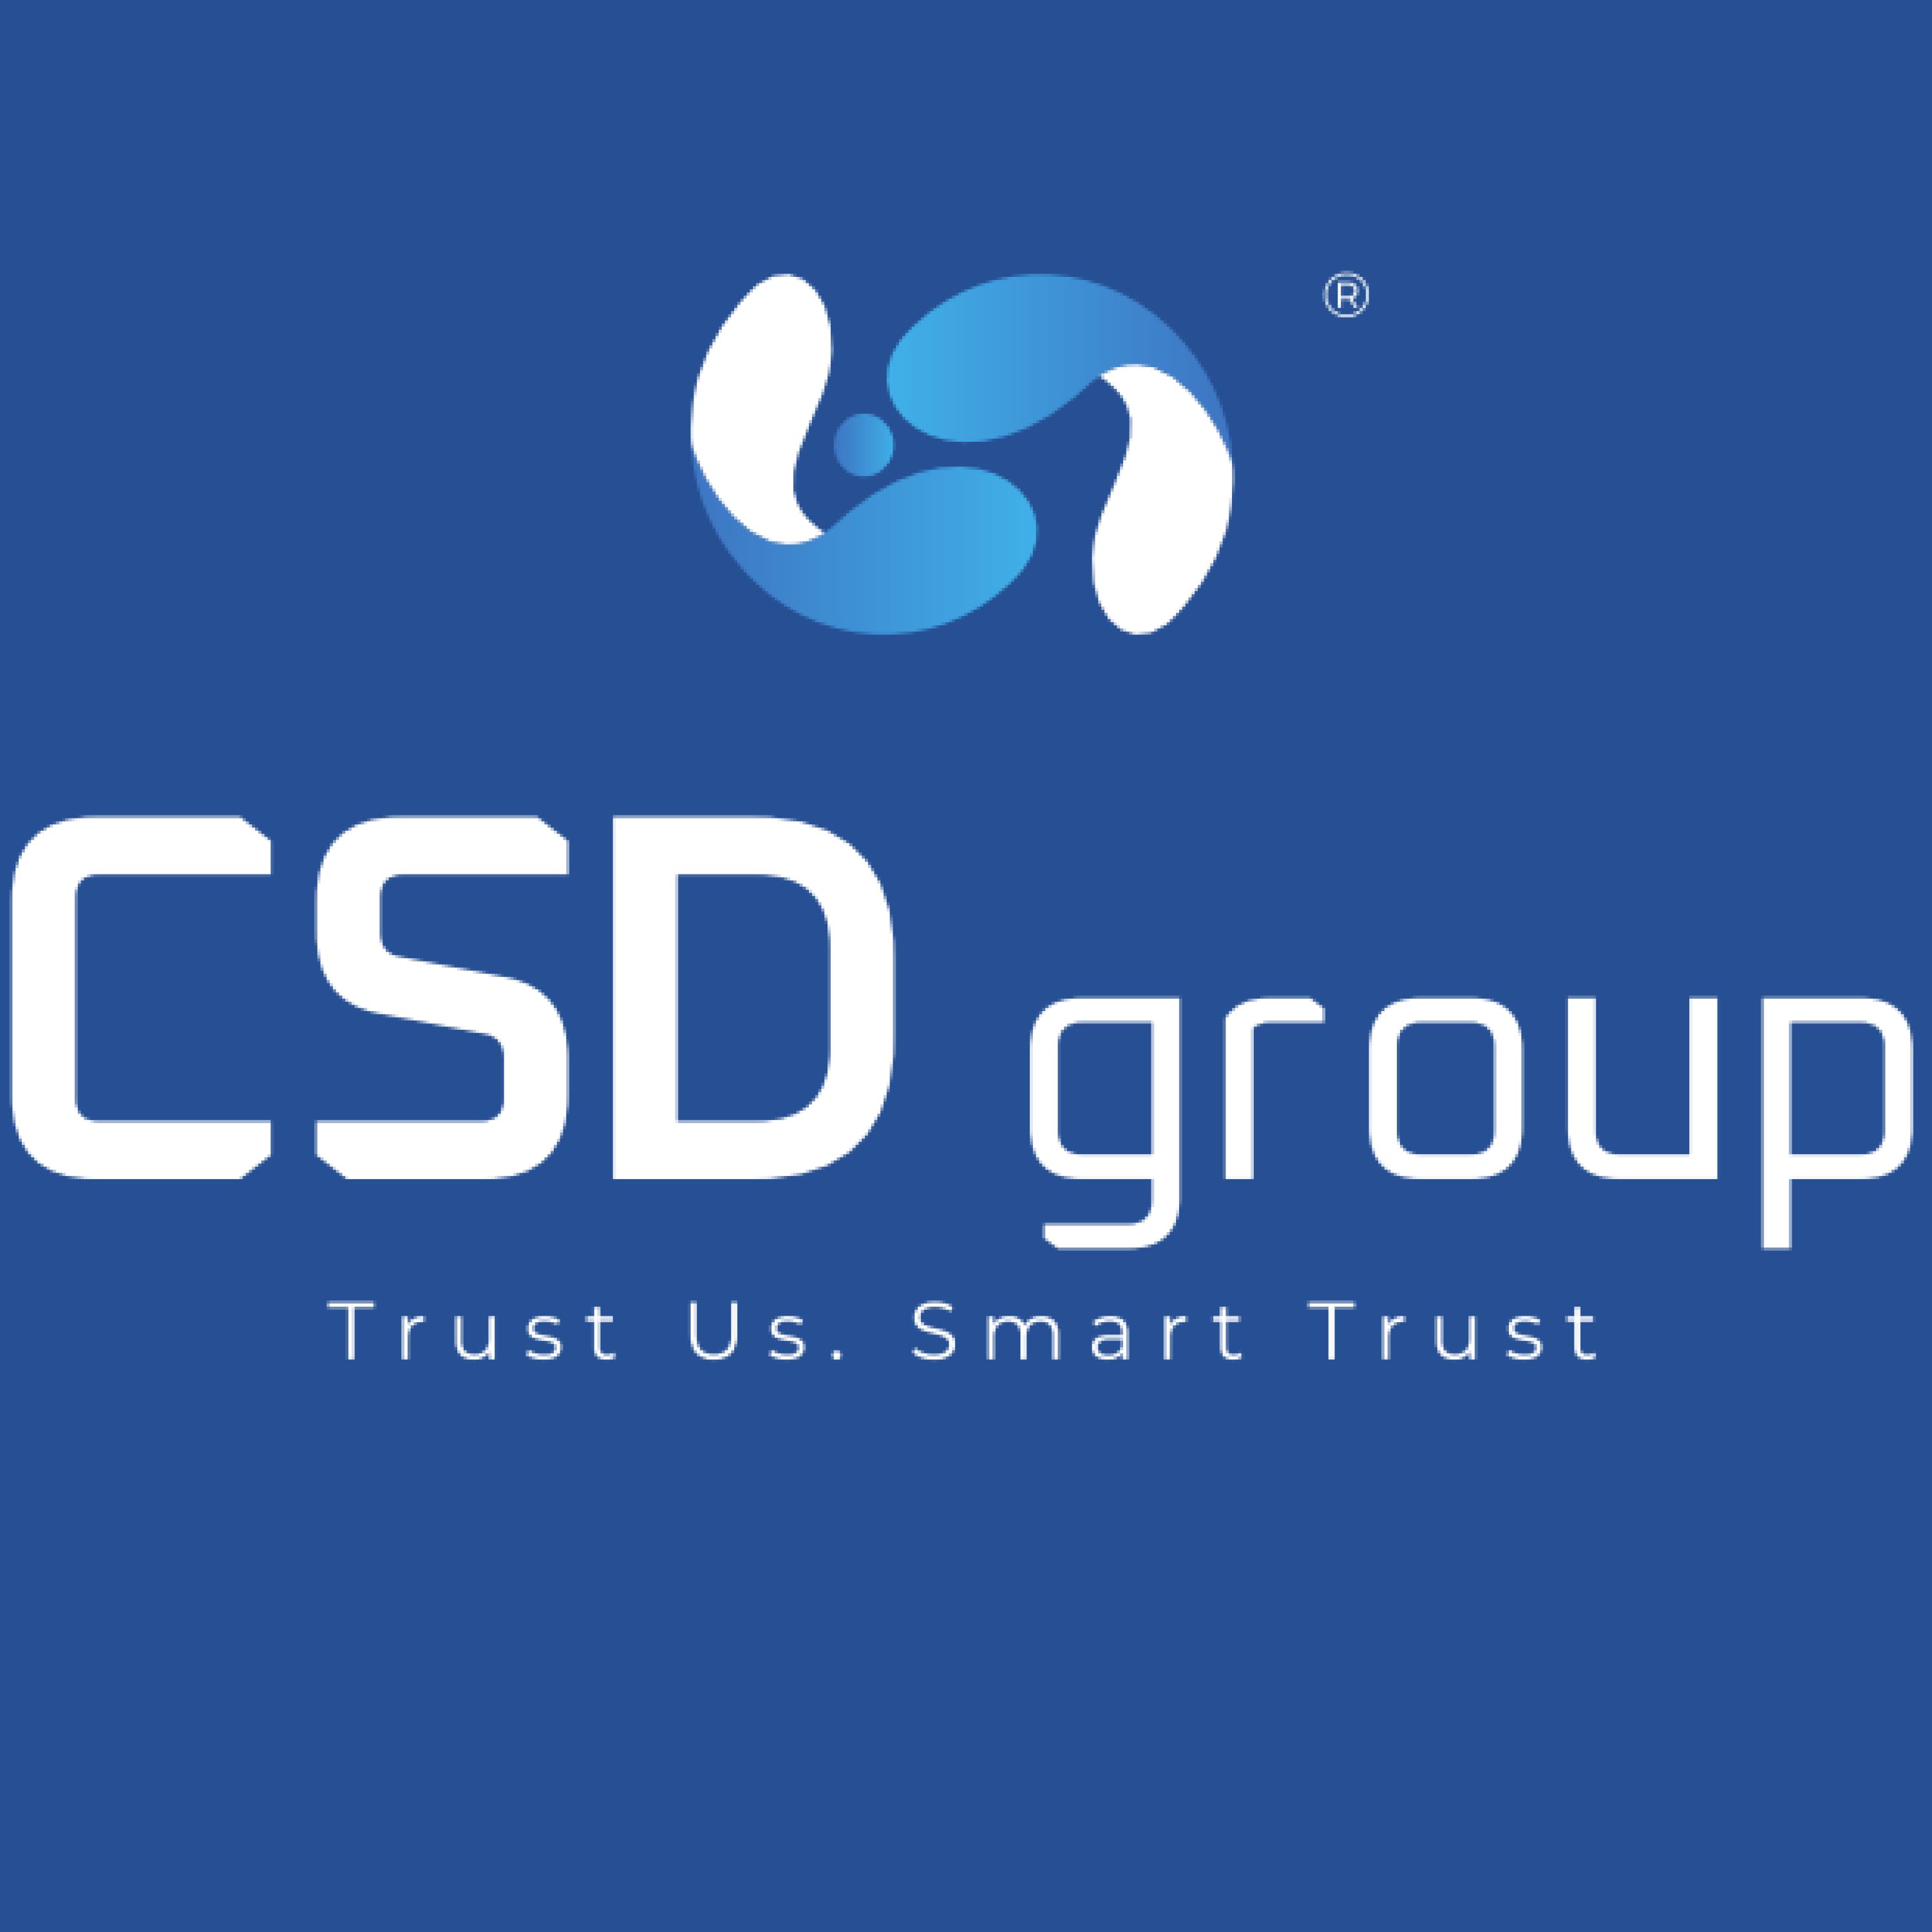 CSD Group